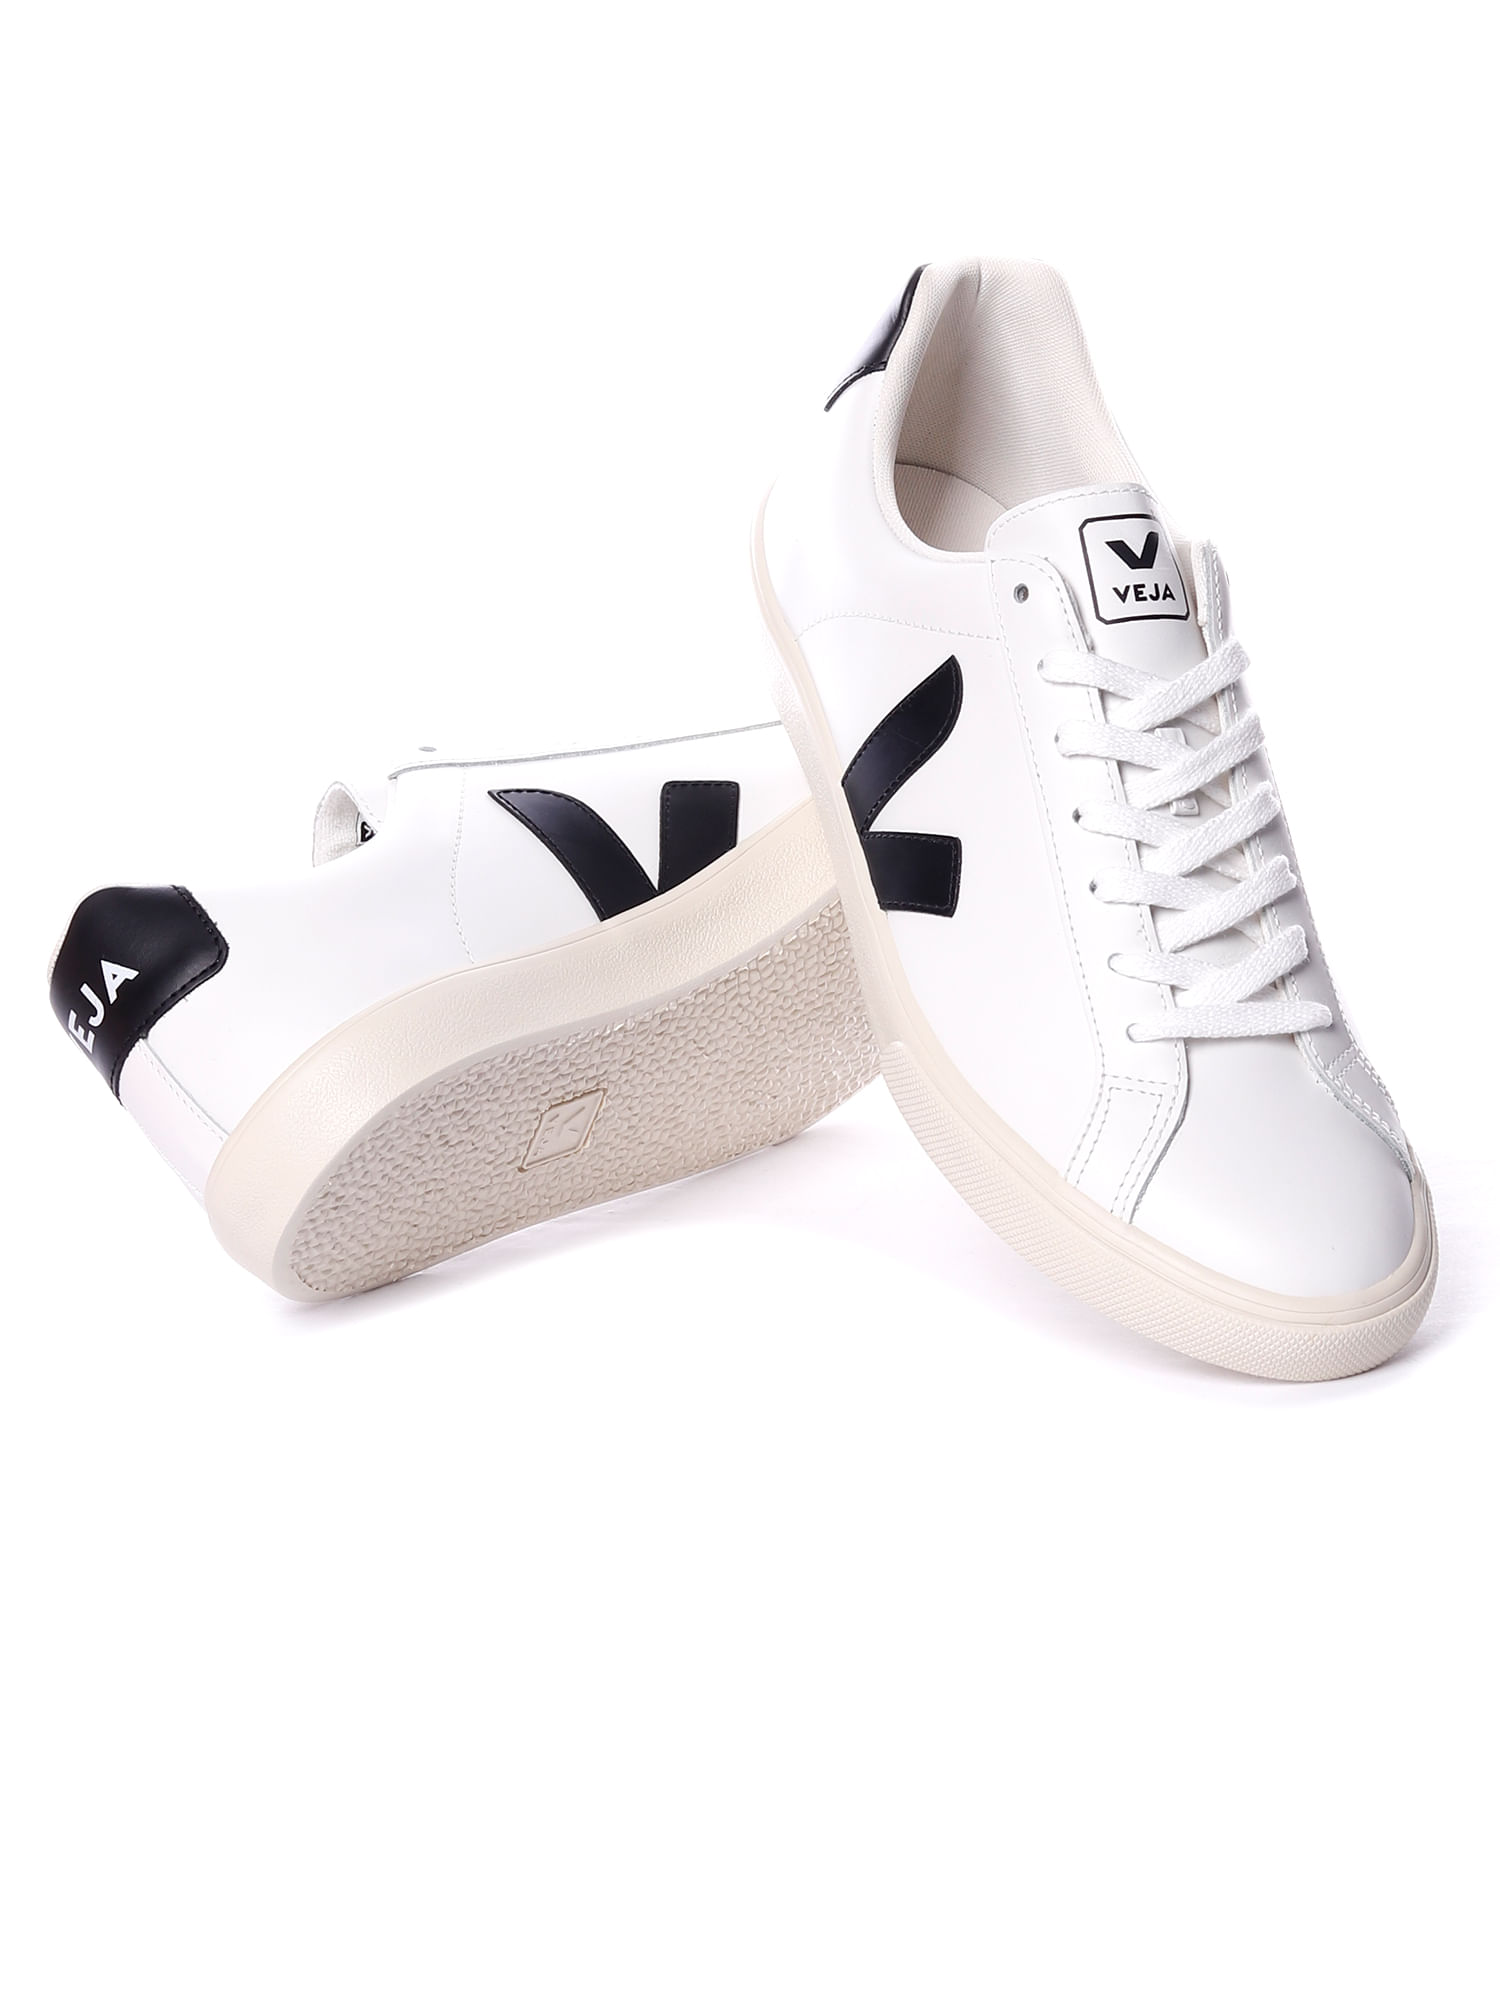 Tenis-veja-esplar-logo-leather-white-black-White-black